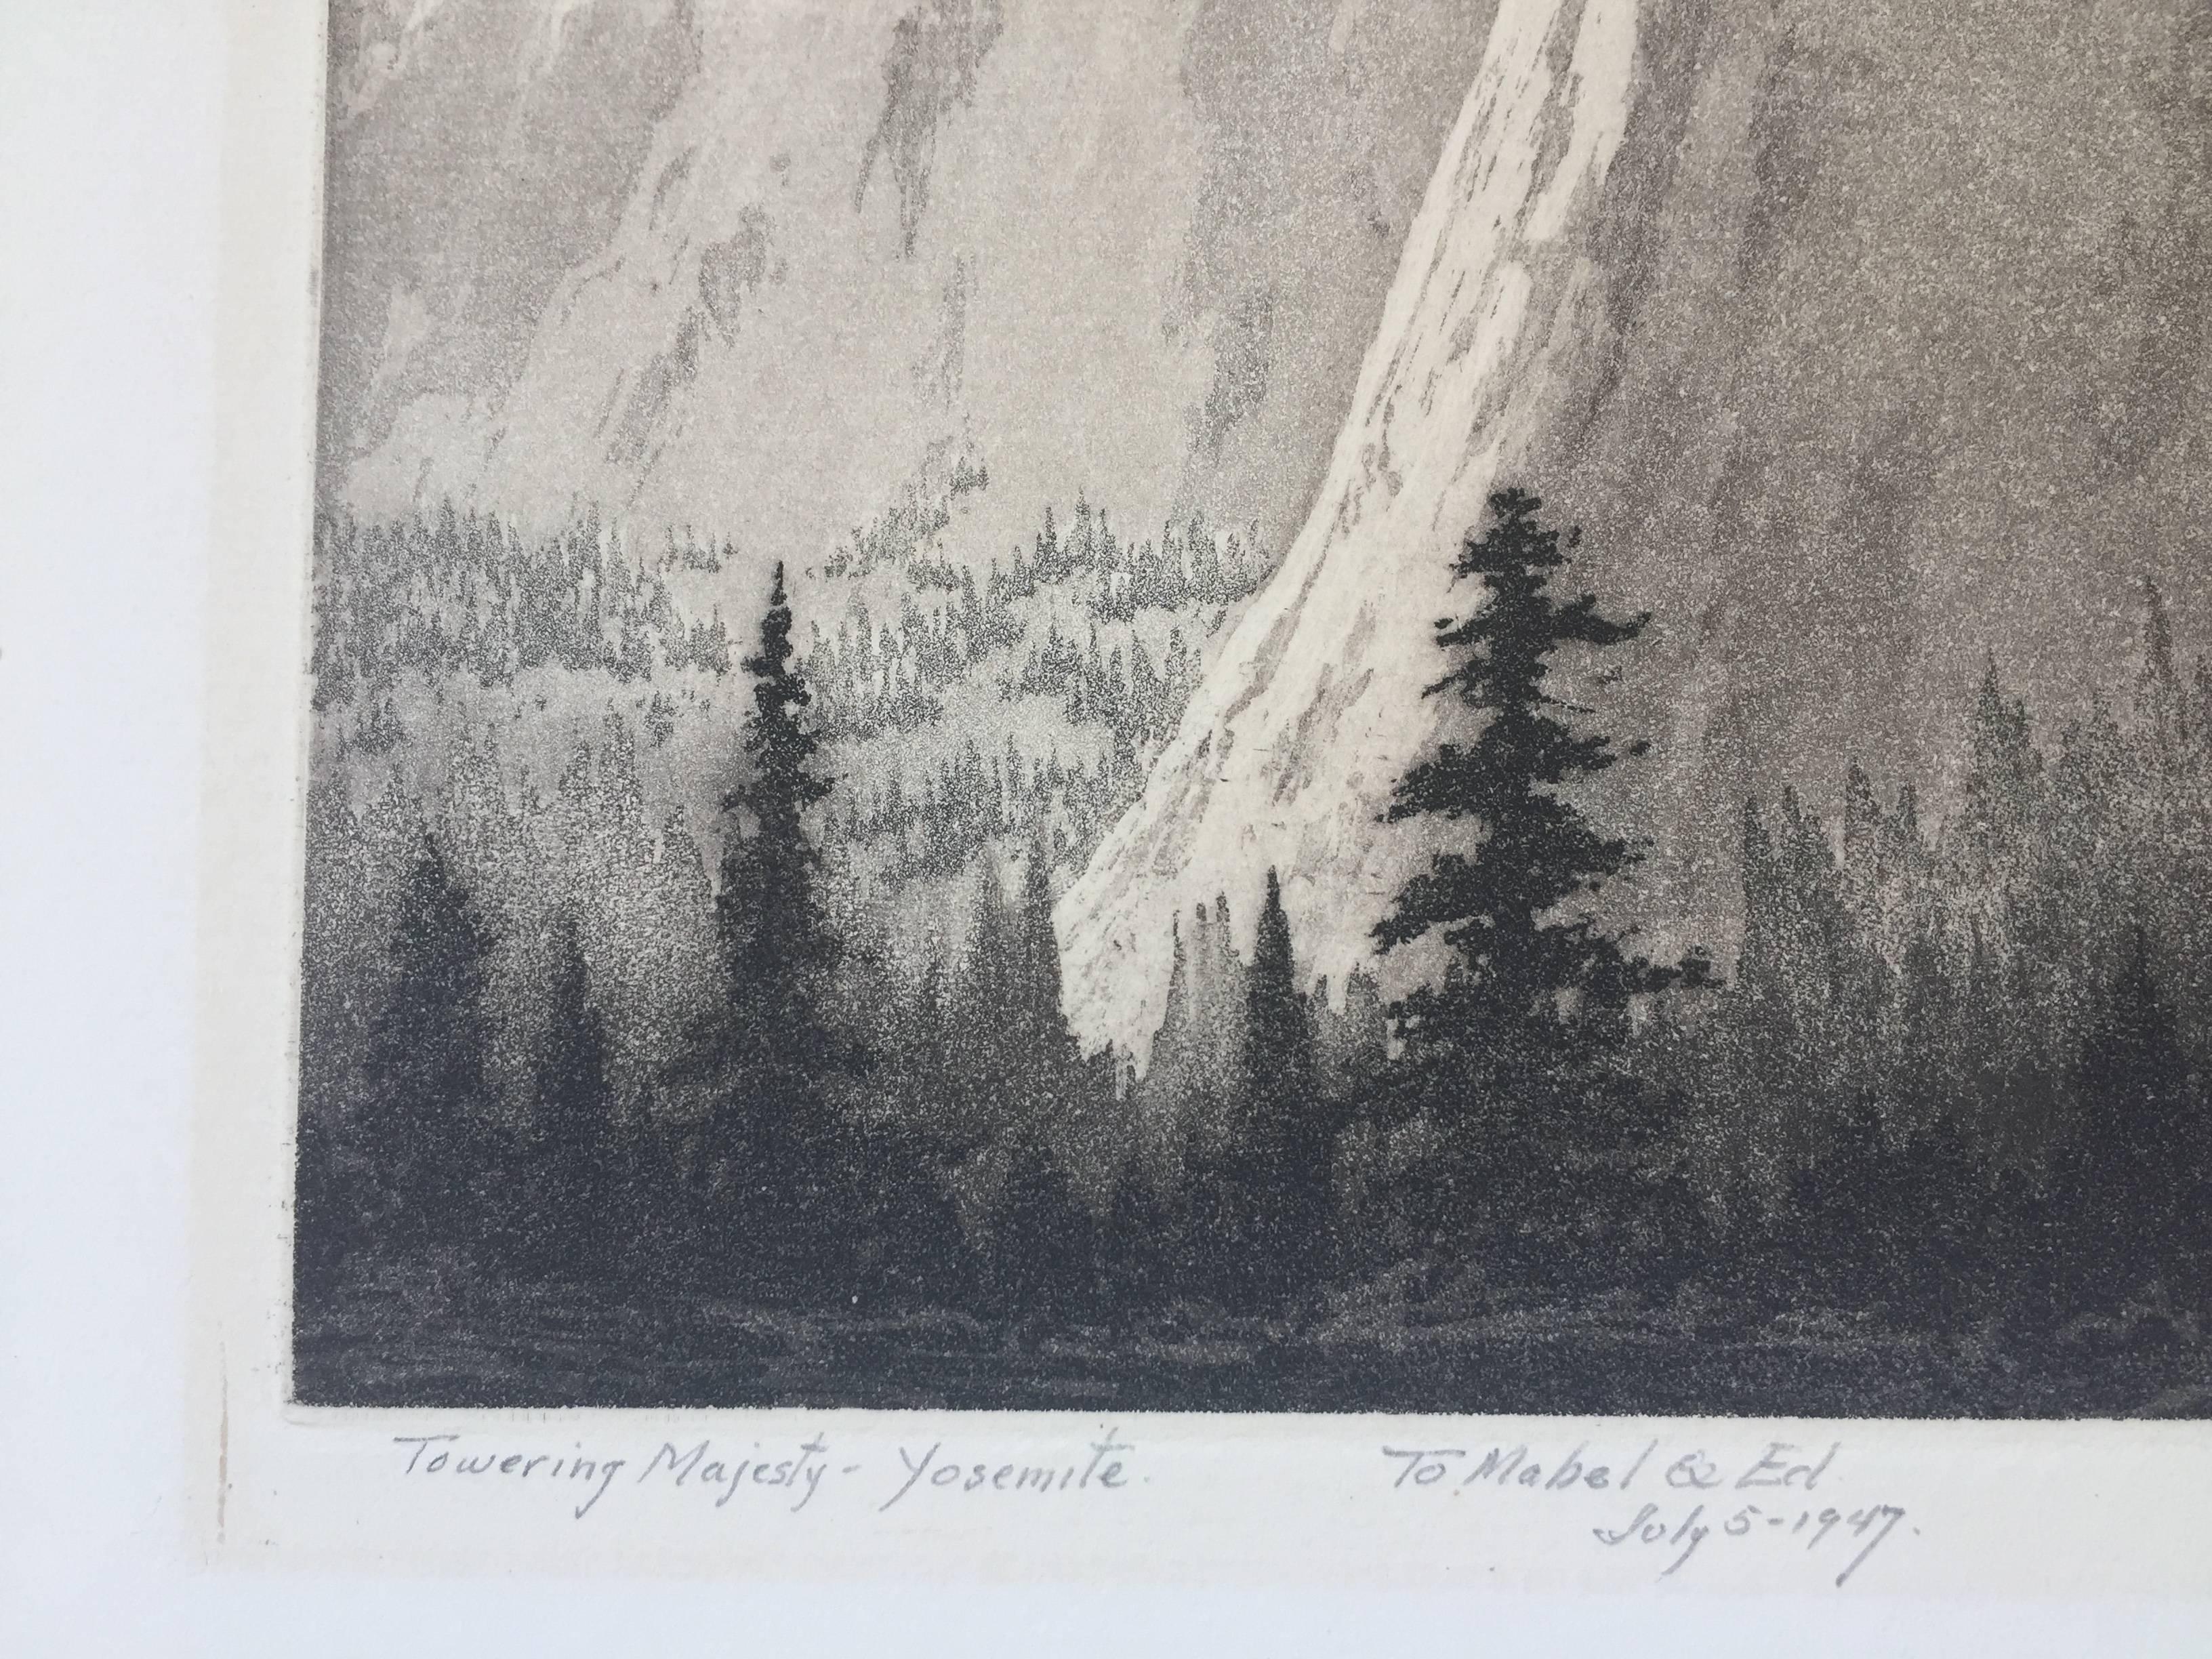 TOWERING MAJESTY - YOSEMITE - Gray Landscape Print by Harold Lukens Doolittle